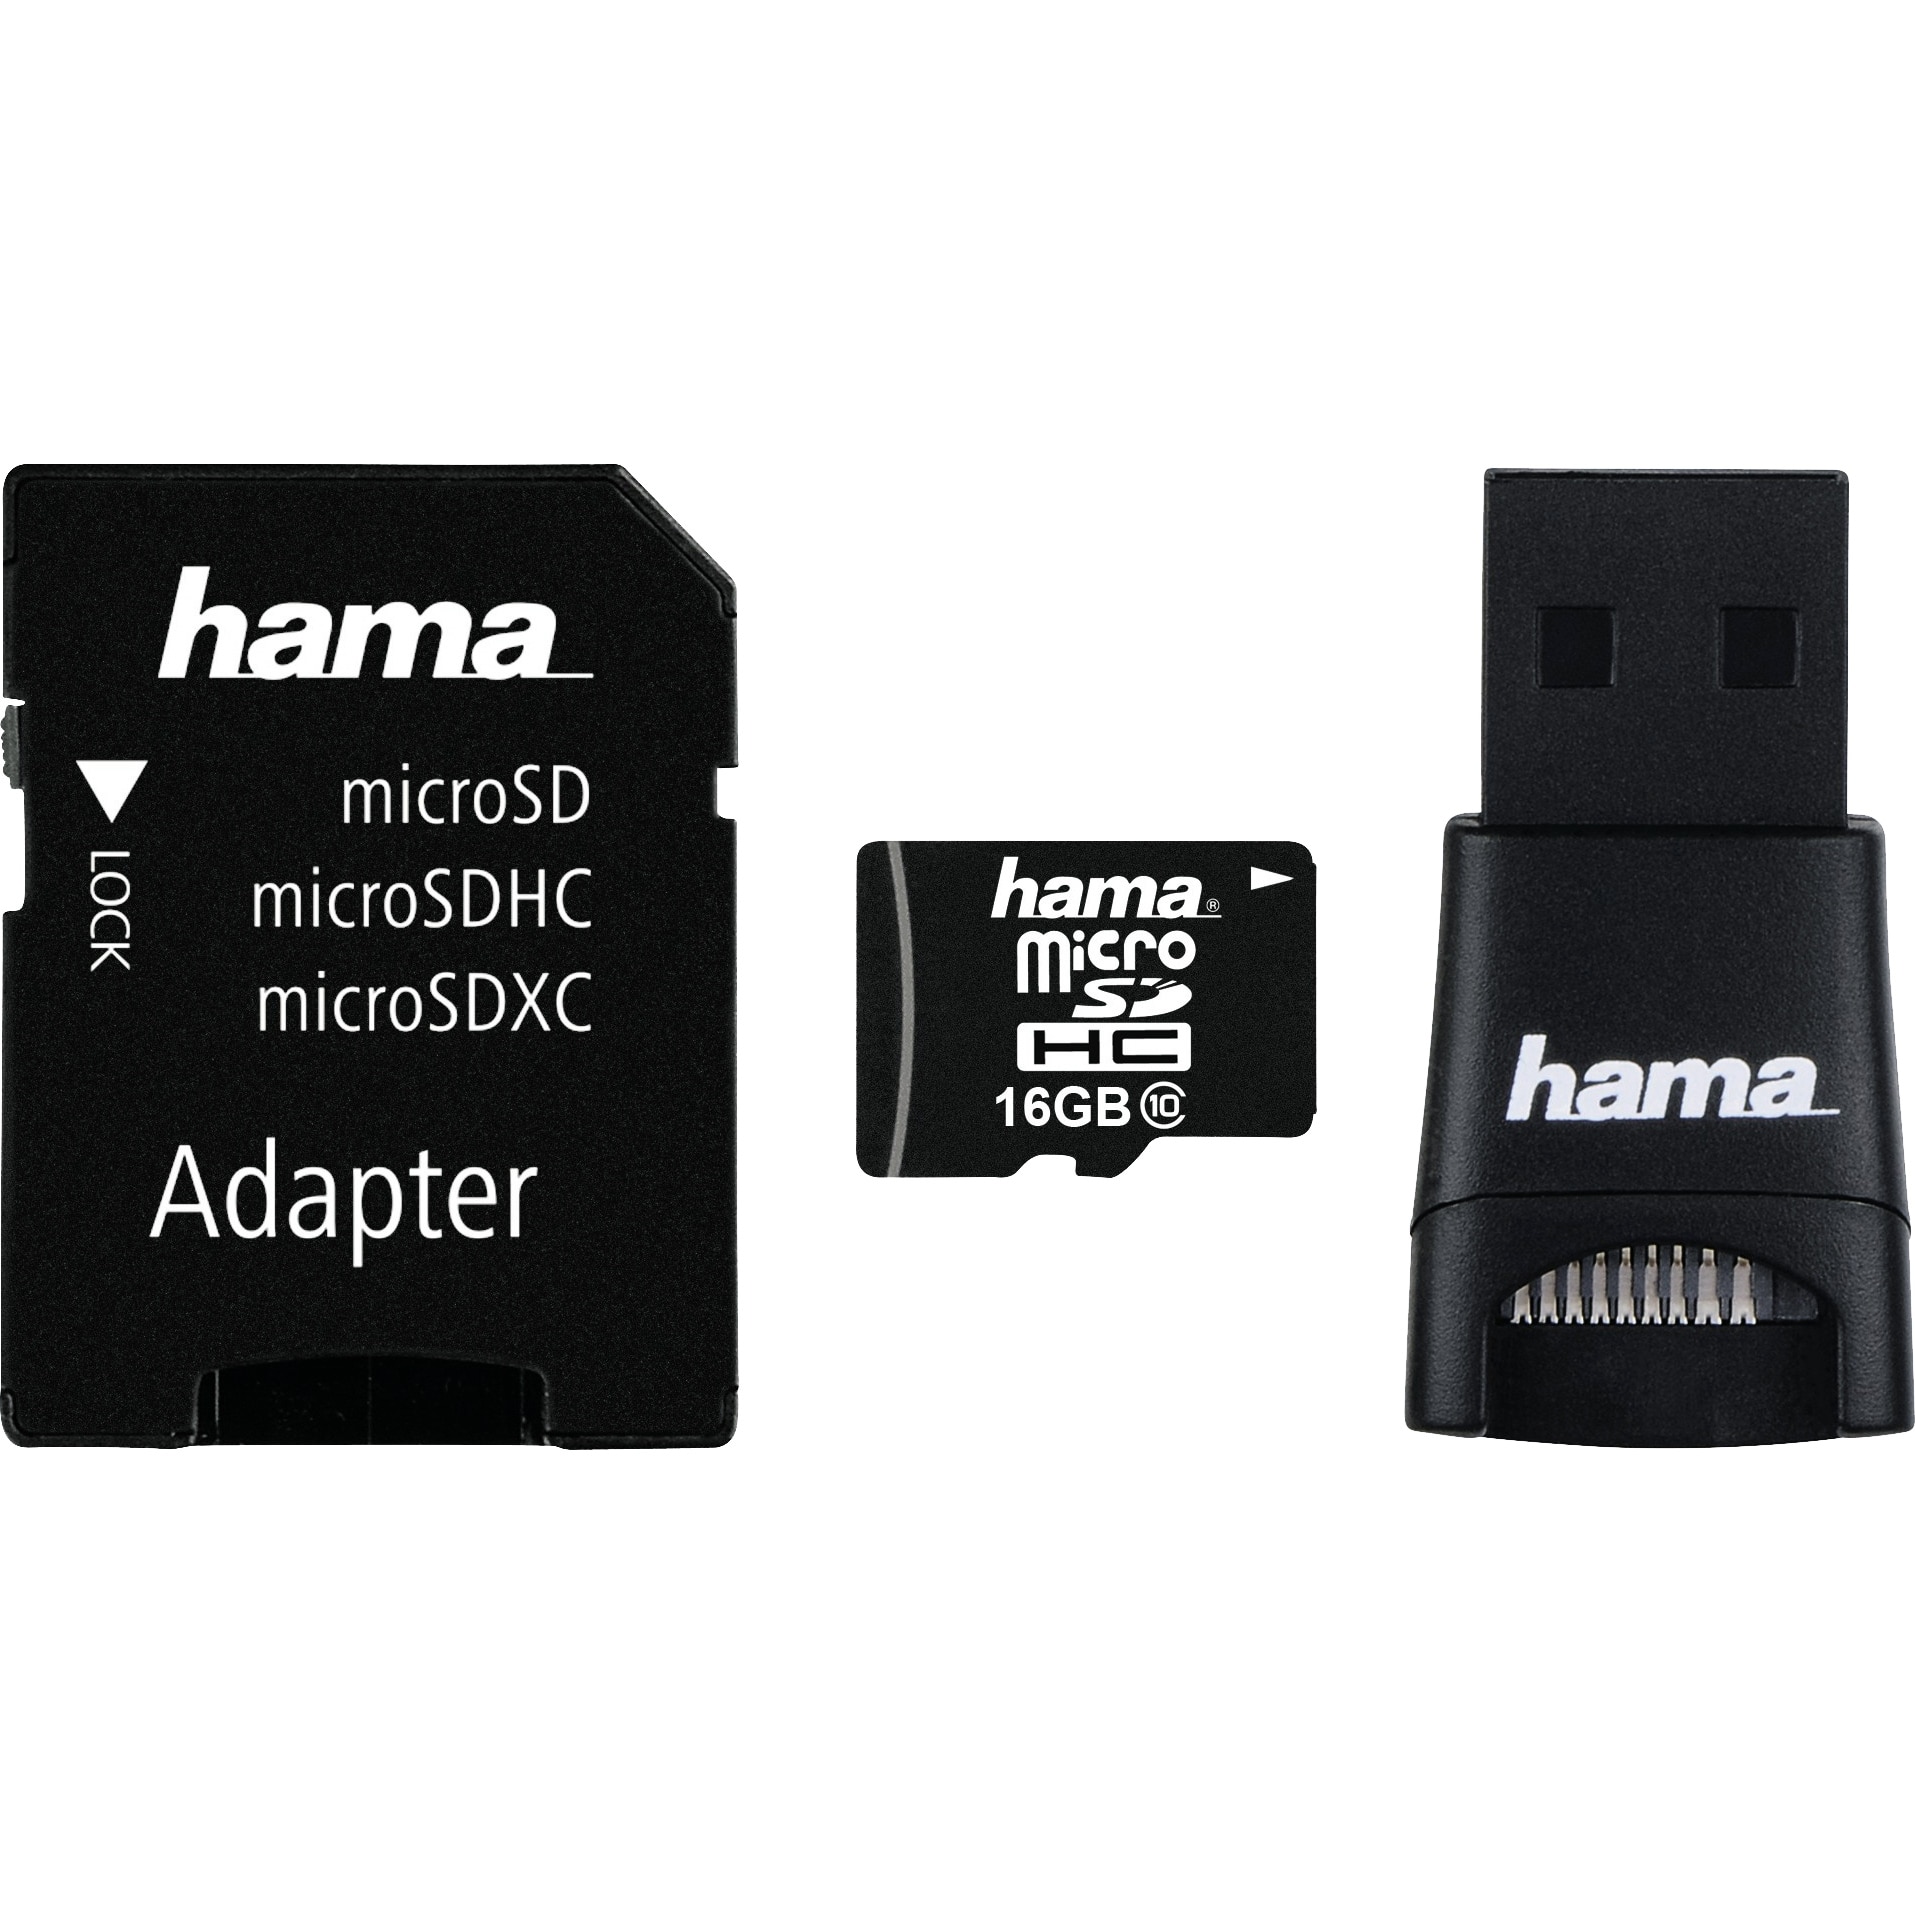 Адаптер microsdhc. Переходник MICROSD на SD. MICROSD USB 4pin. Adapter MICROSD UHS II на SD. Hama MICROSD 256 GB.